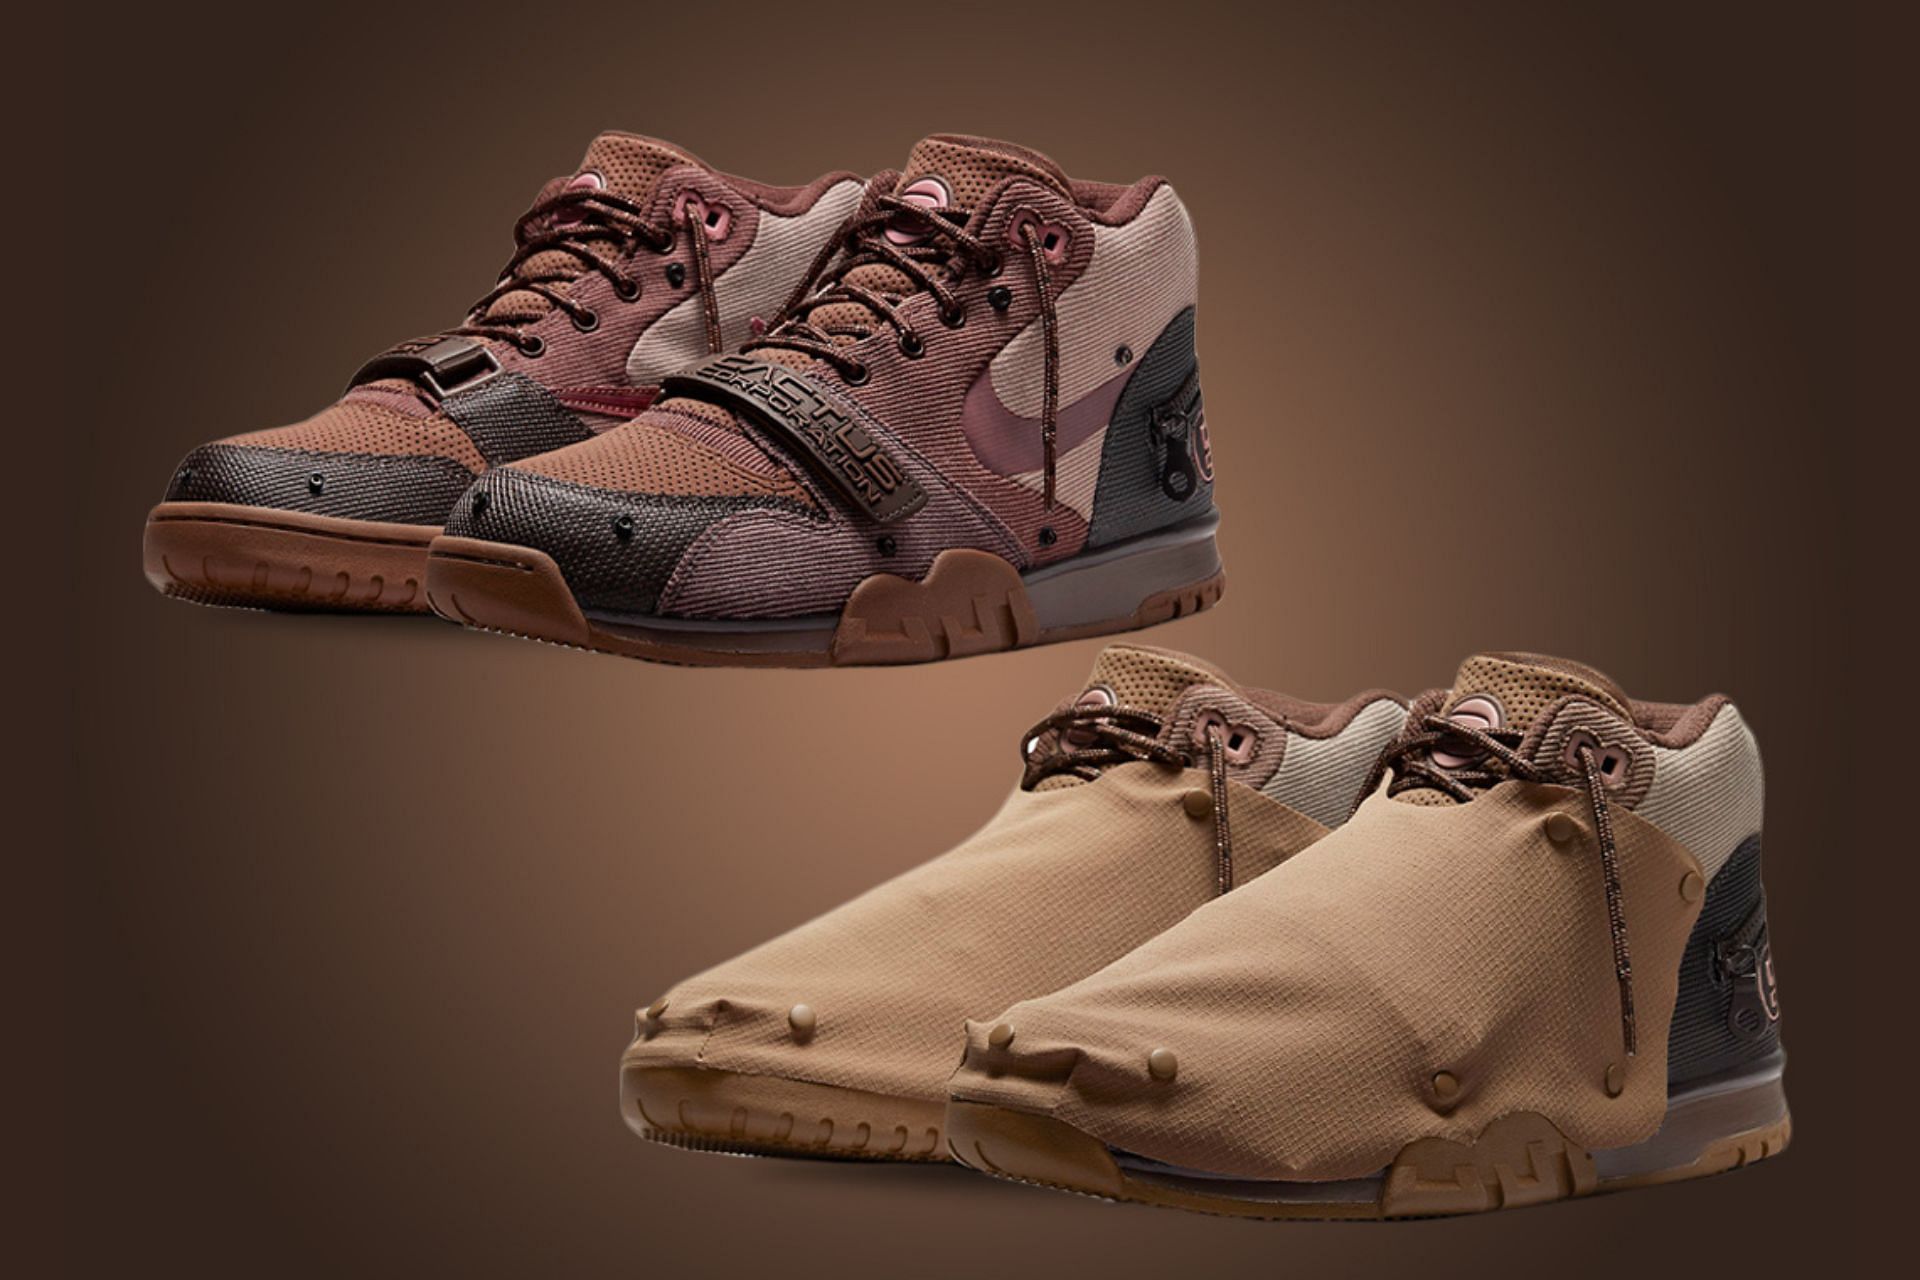 Take a closer look at the pairs (Image via Nike)